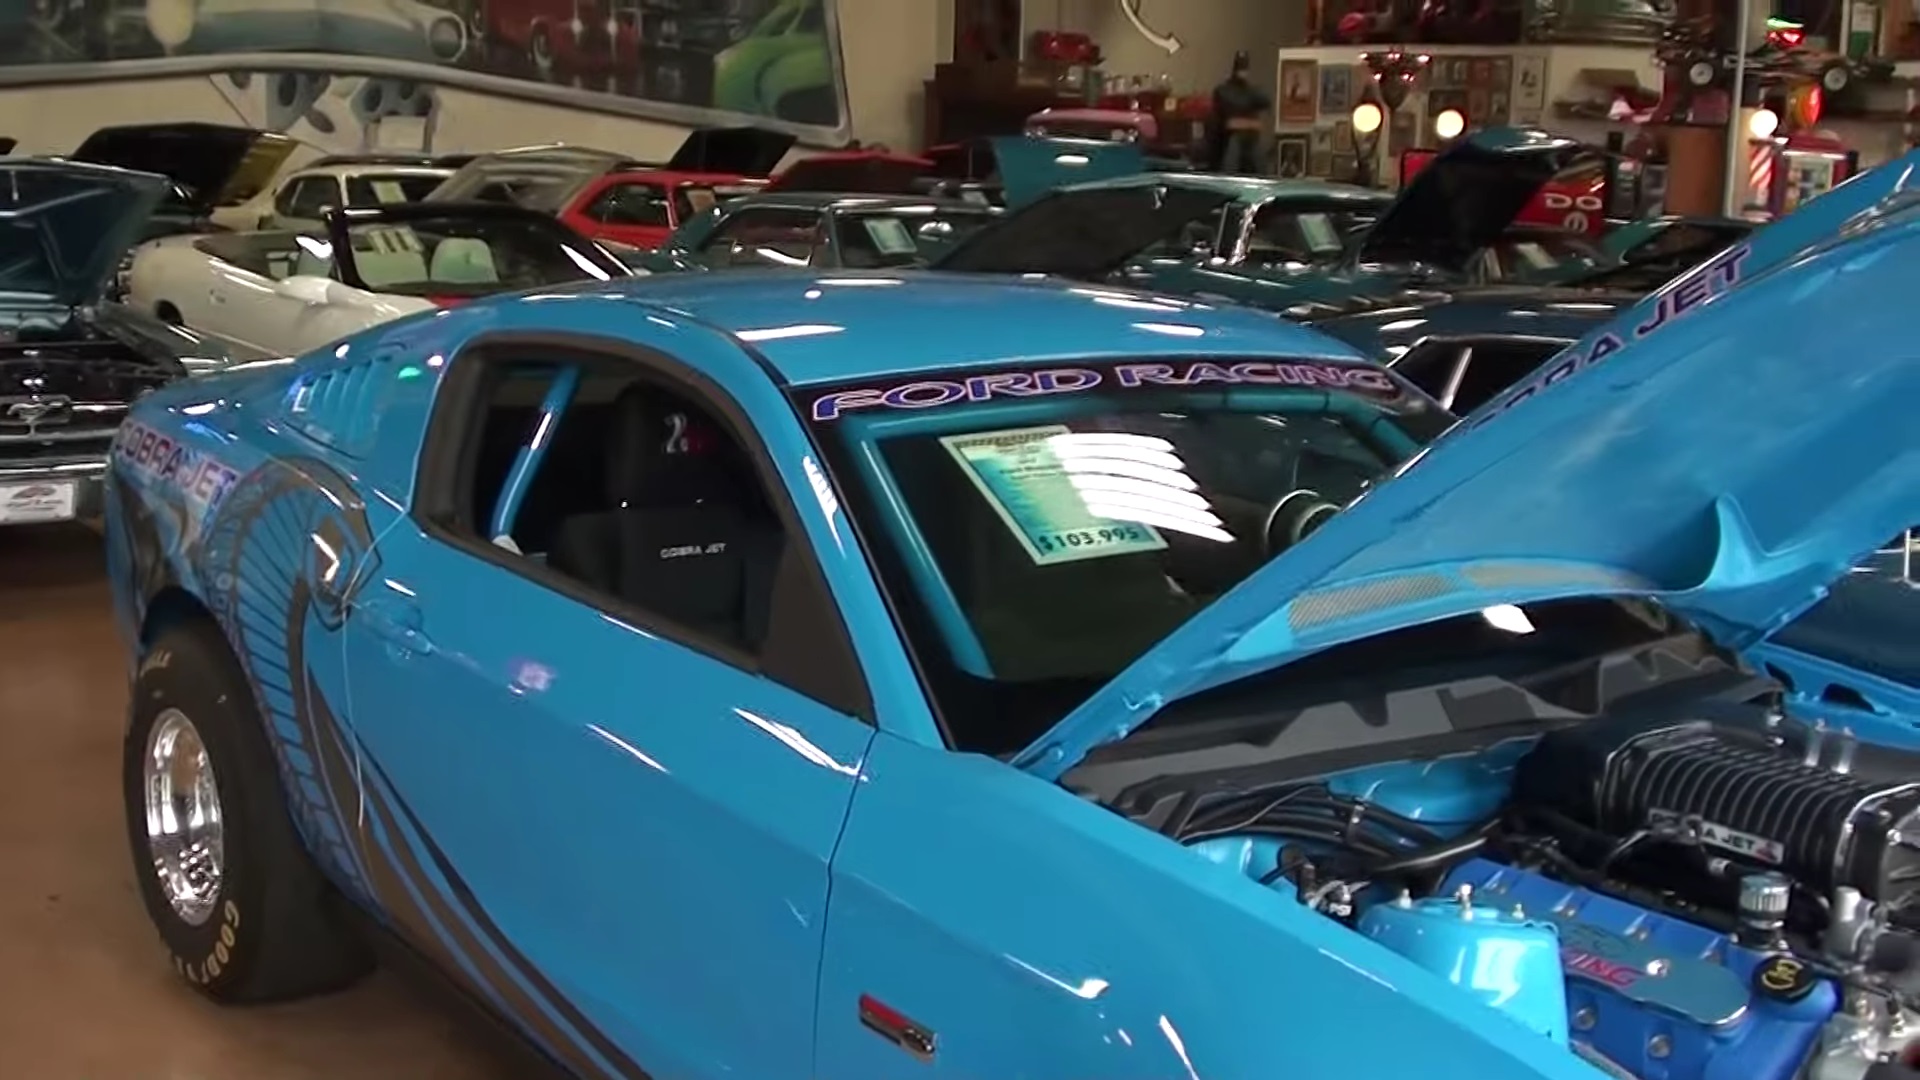 Video: Supercharged 2012 Ford Mustang Super Cobra Jet Drag Car Walkaround